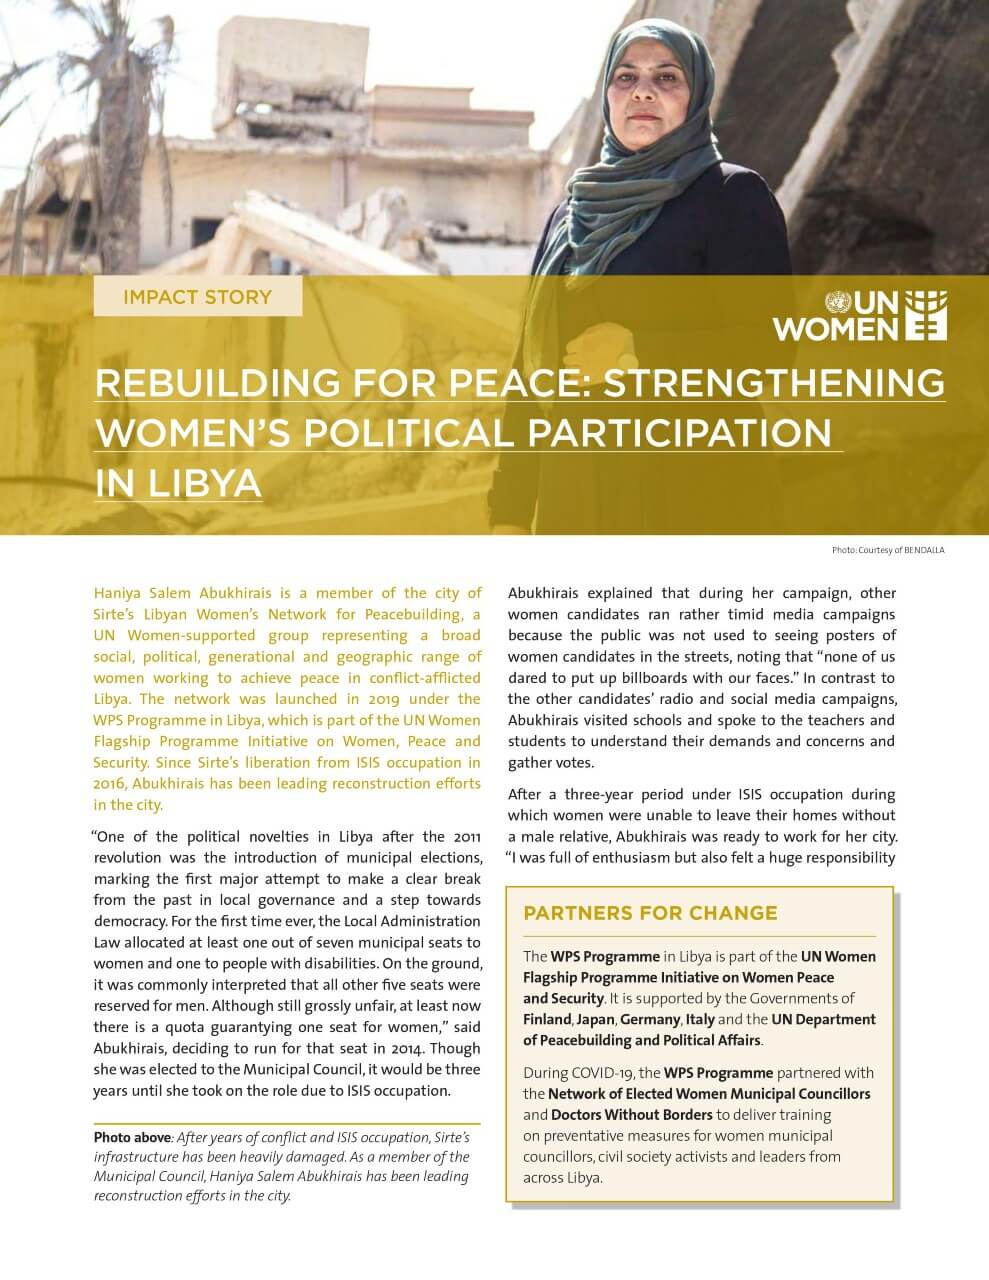 UN Women impact story: Rebuilding for peace: Strengthening women’s political participation in Libya